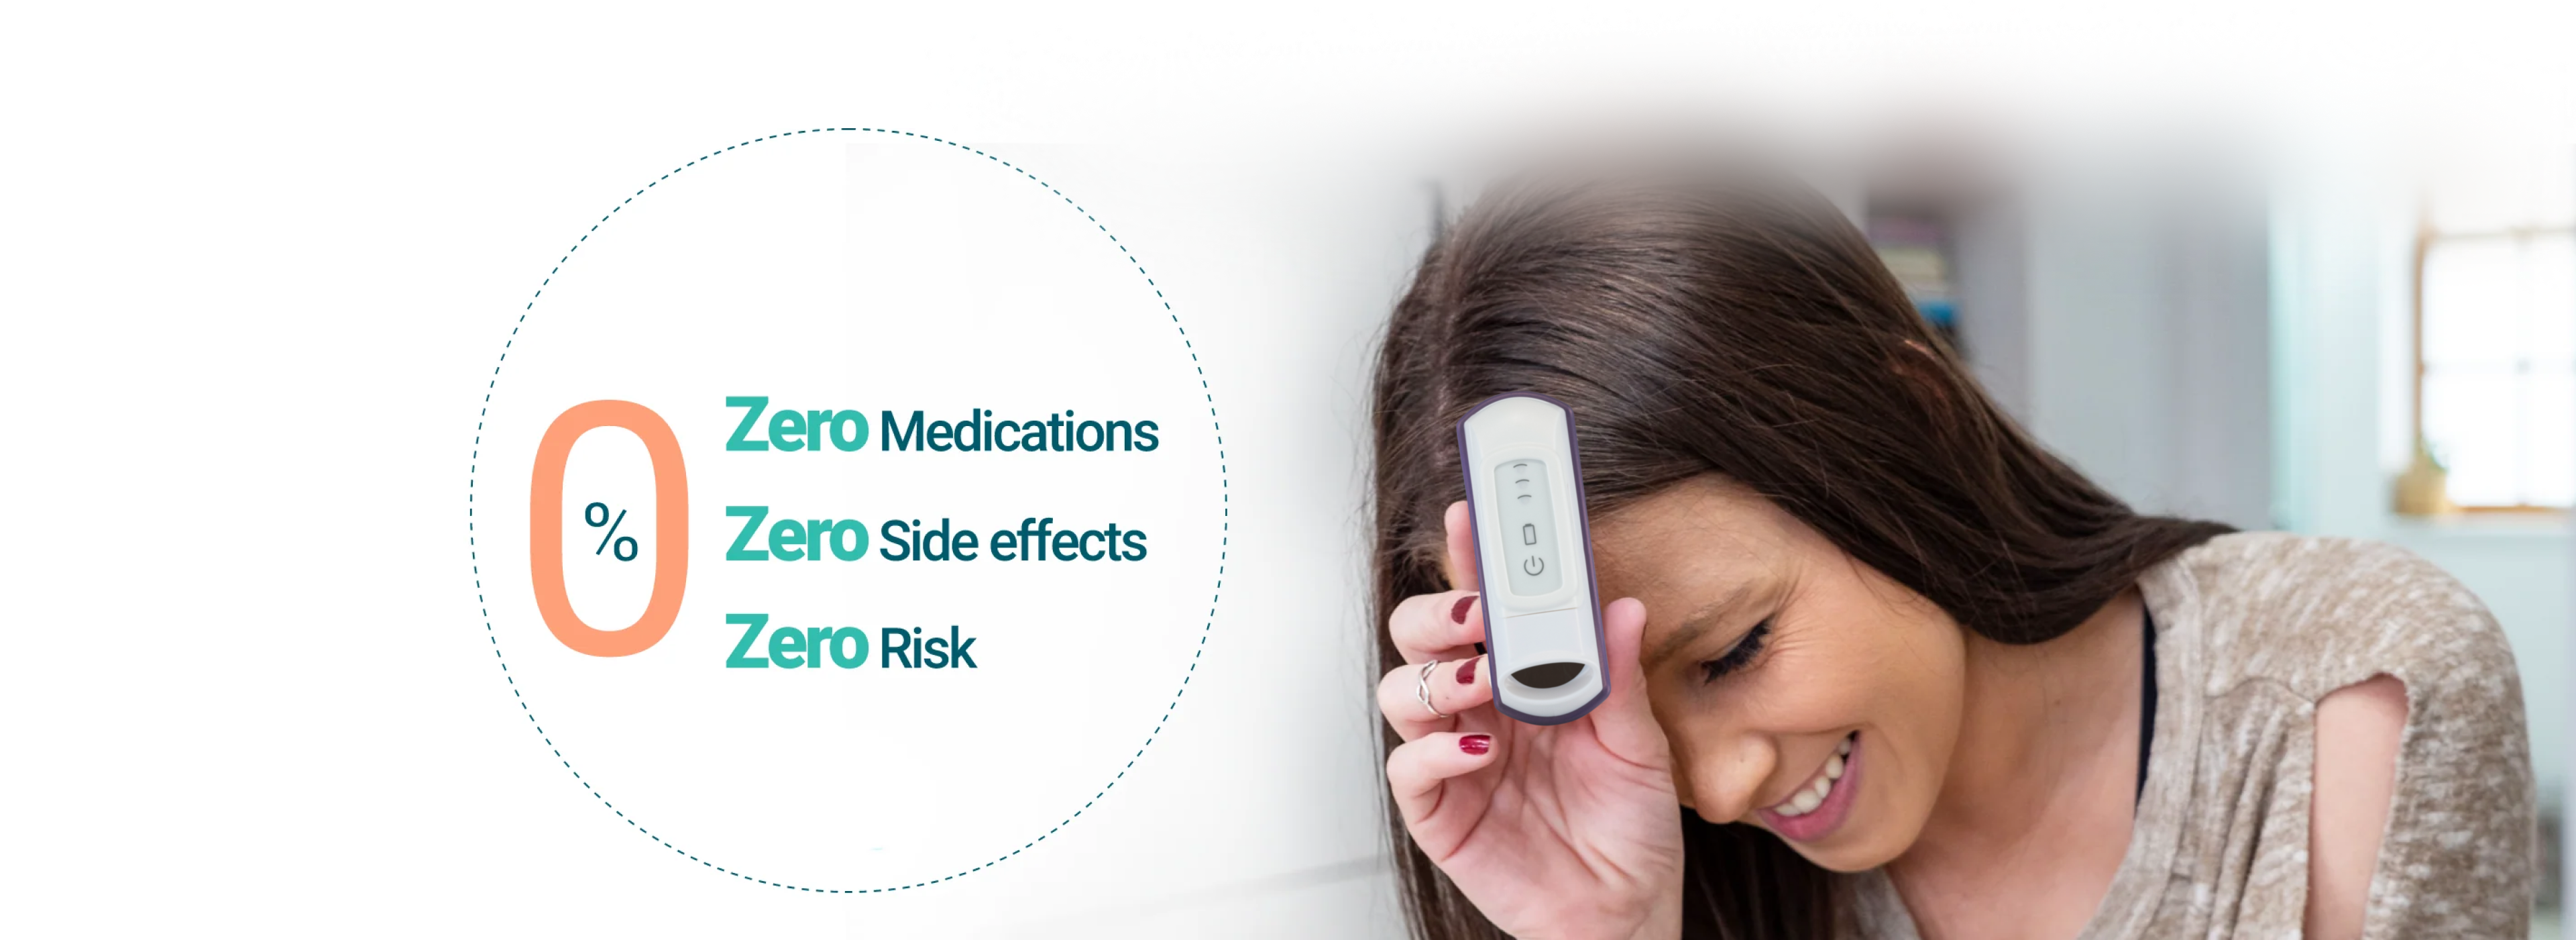 zero medication zero side effects zero risk